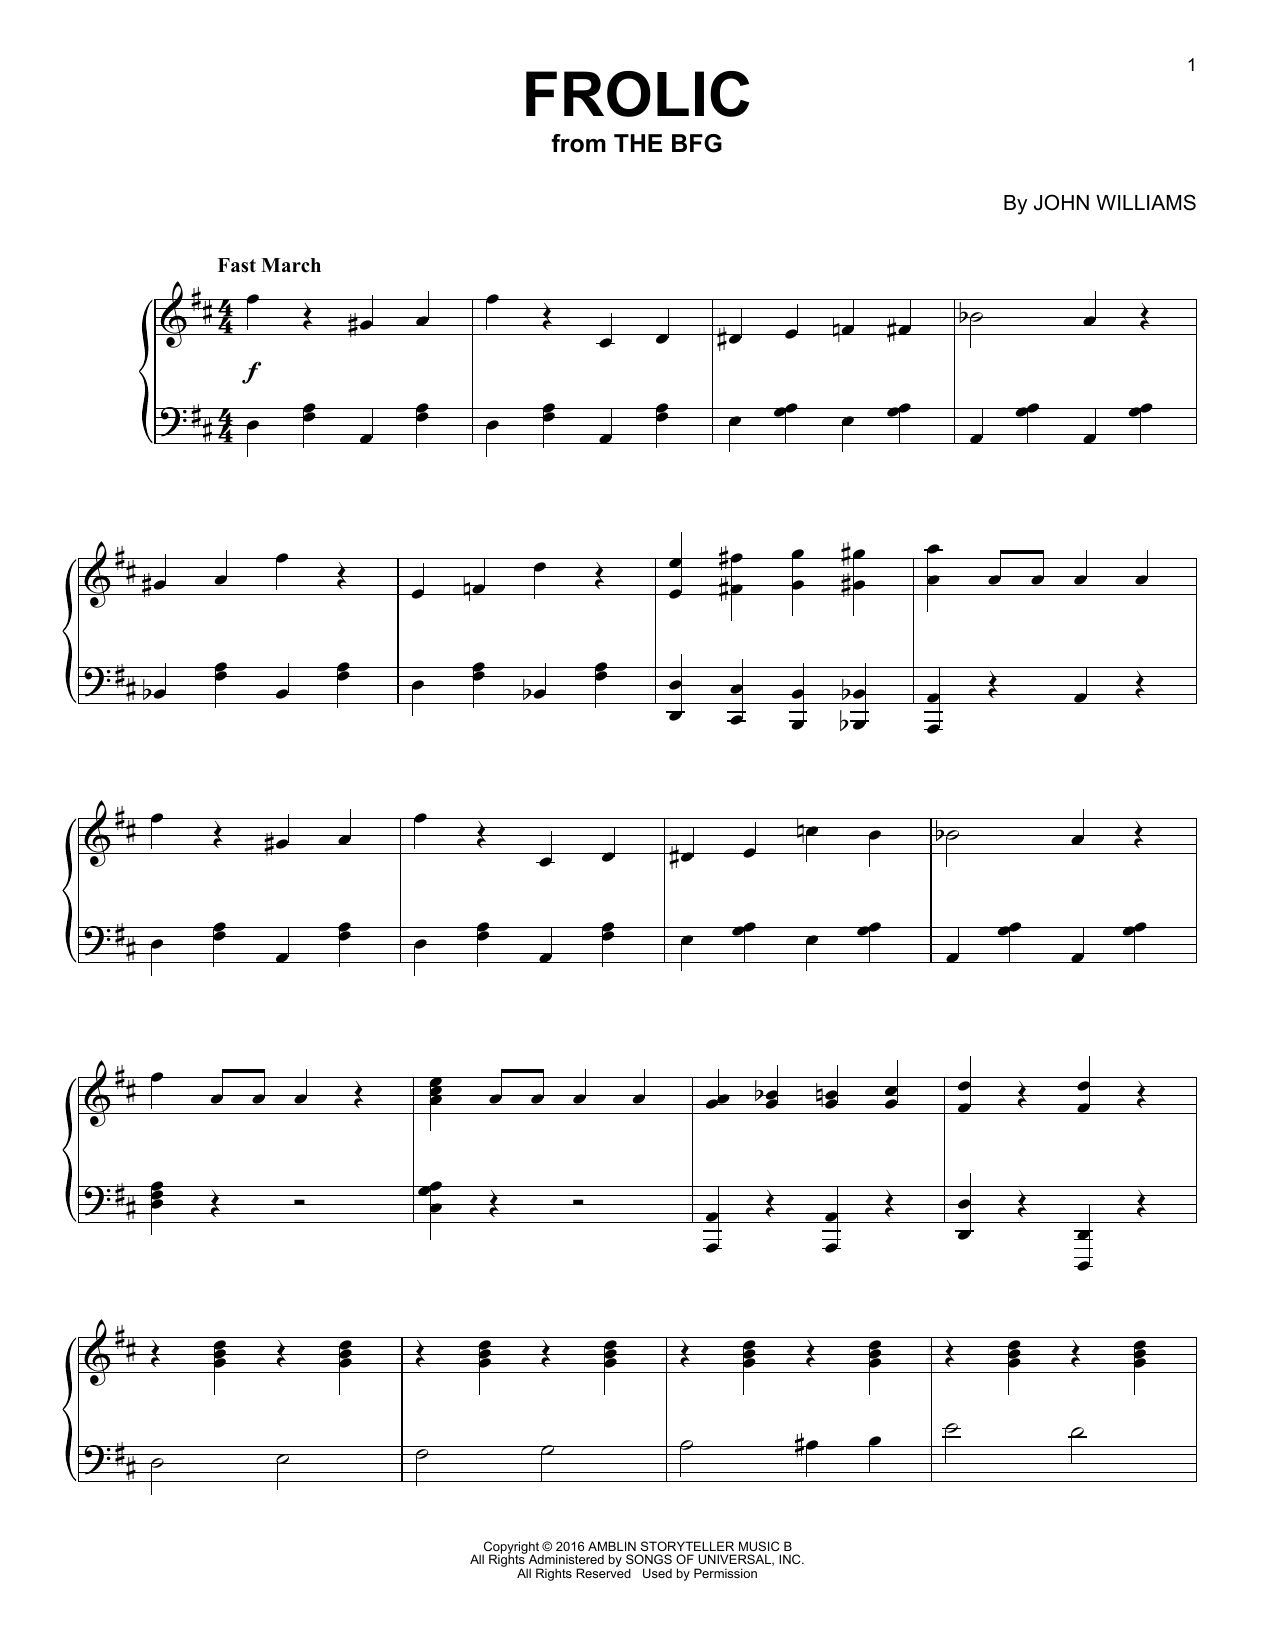 John Williams Frolic Sheet Music Notes & Chords for Piano - Download or Print PDF